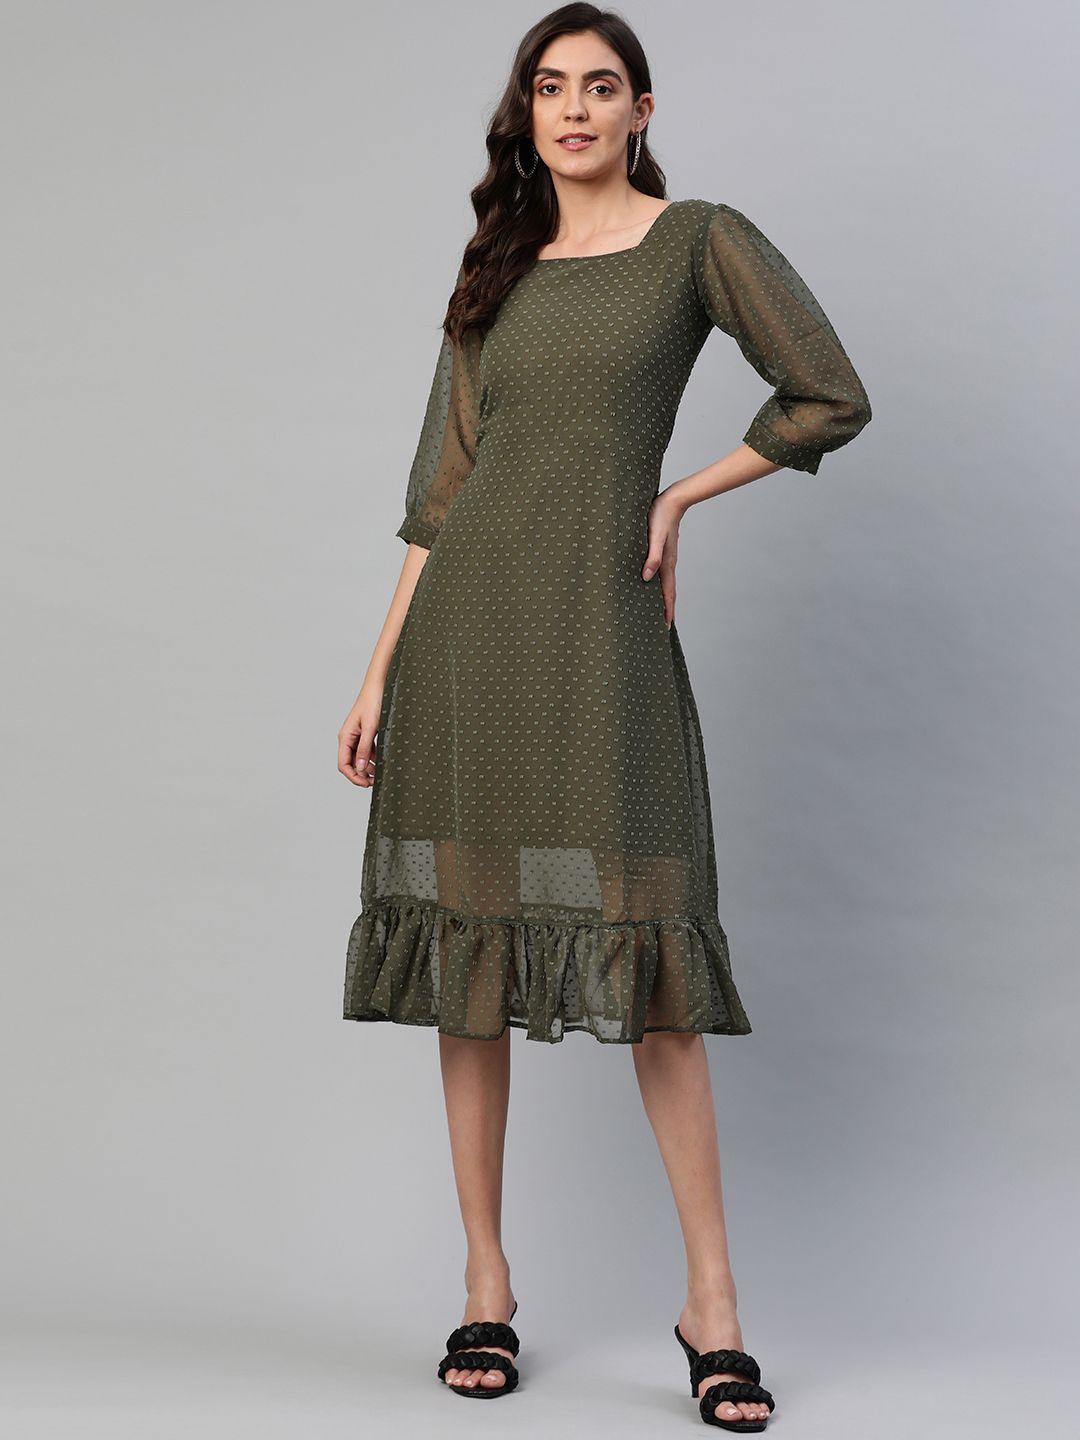 aarika-women-olive-green-dobby-weave-a-line-midi-dress